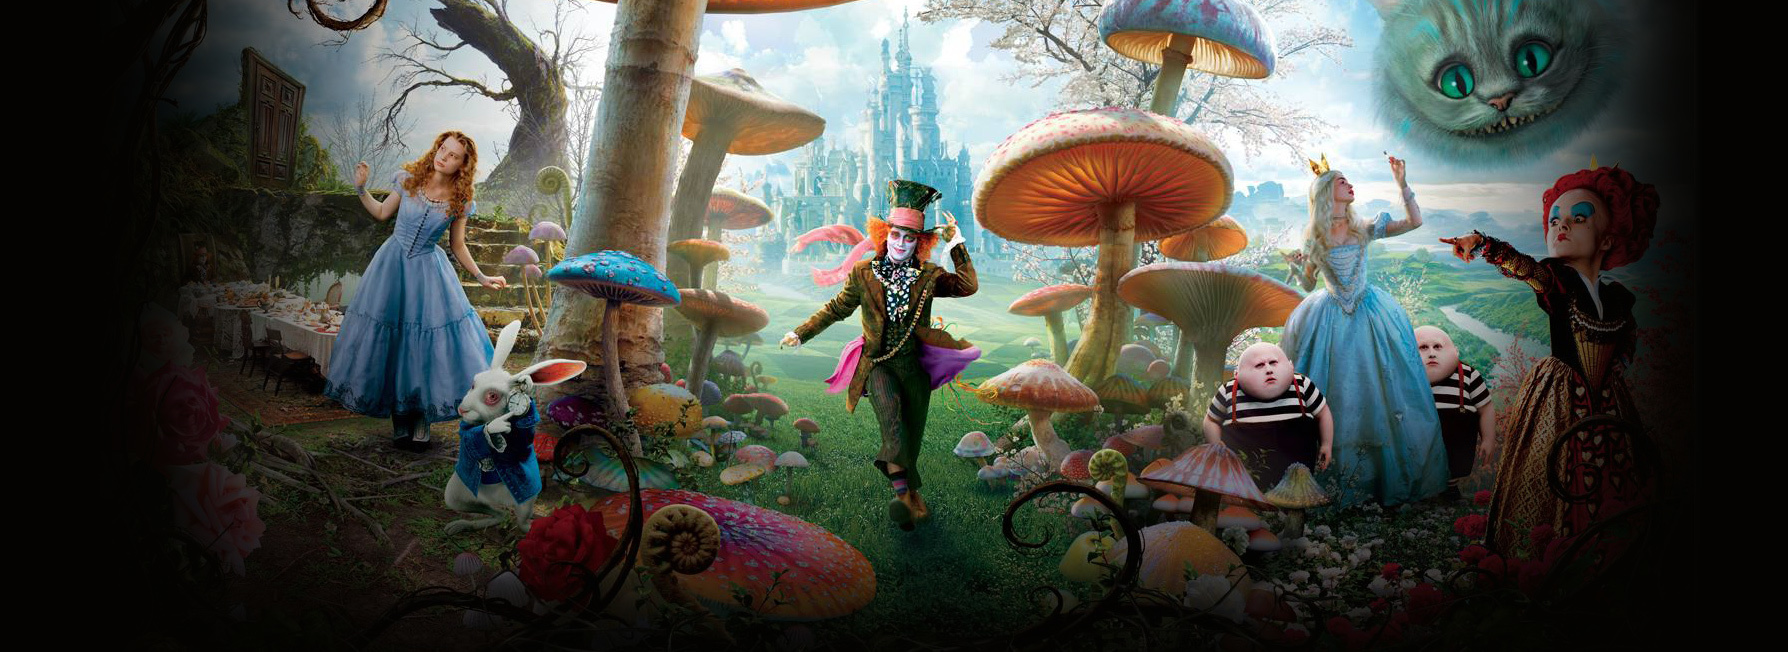 Movie poster Alice in Wonderland